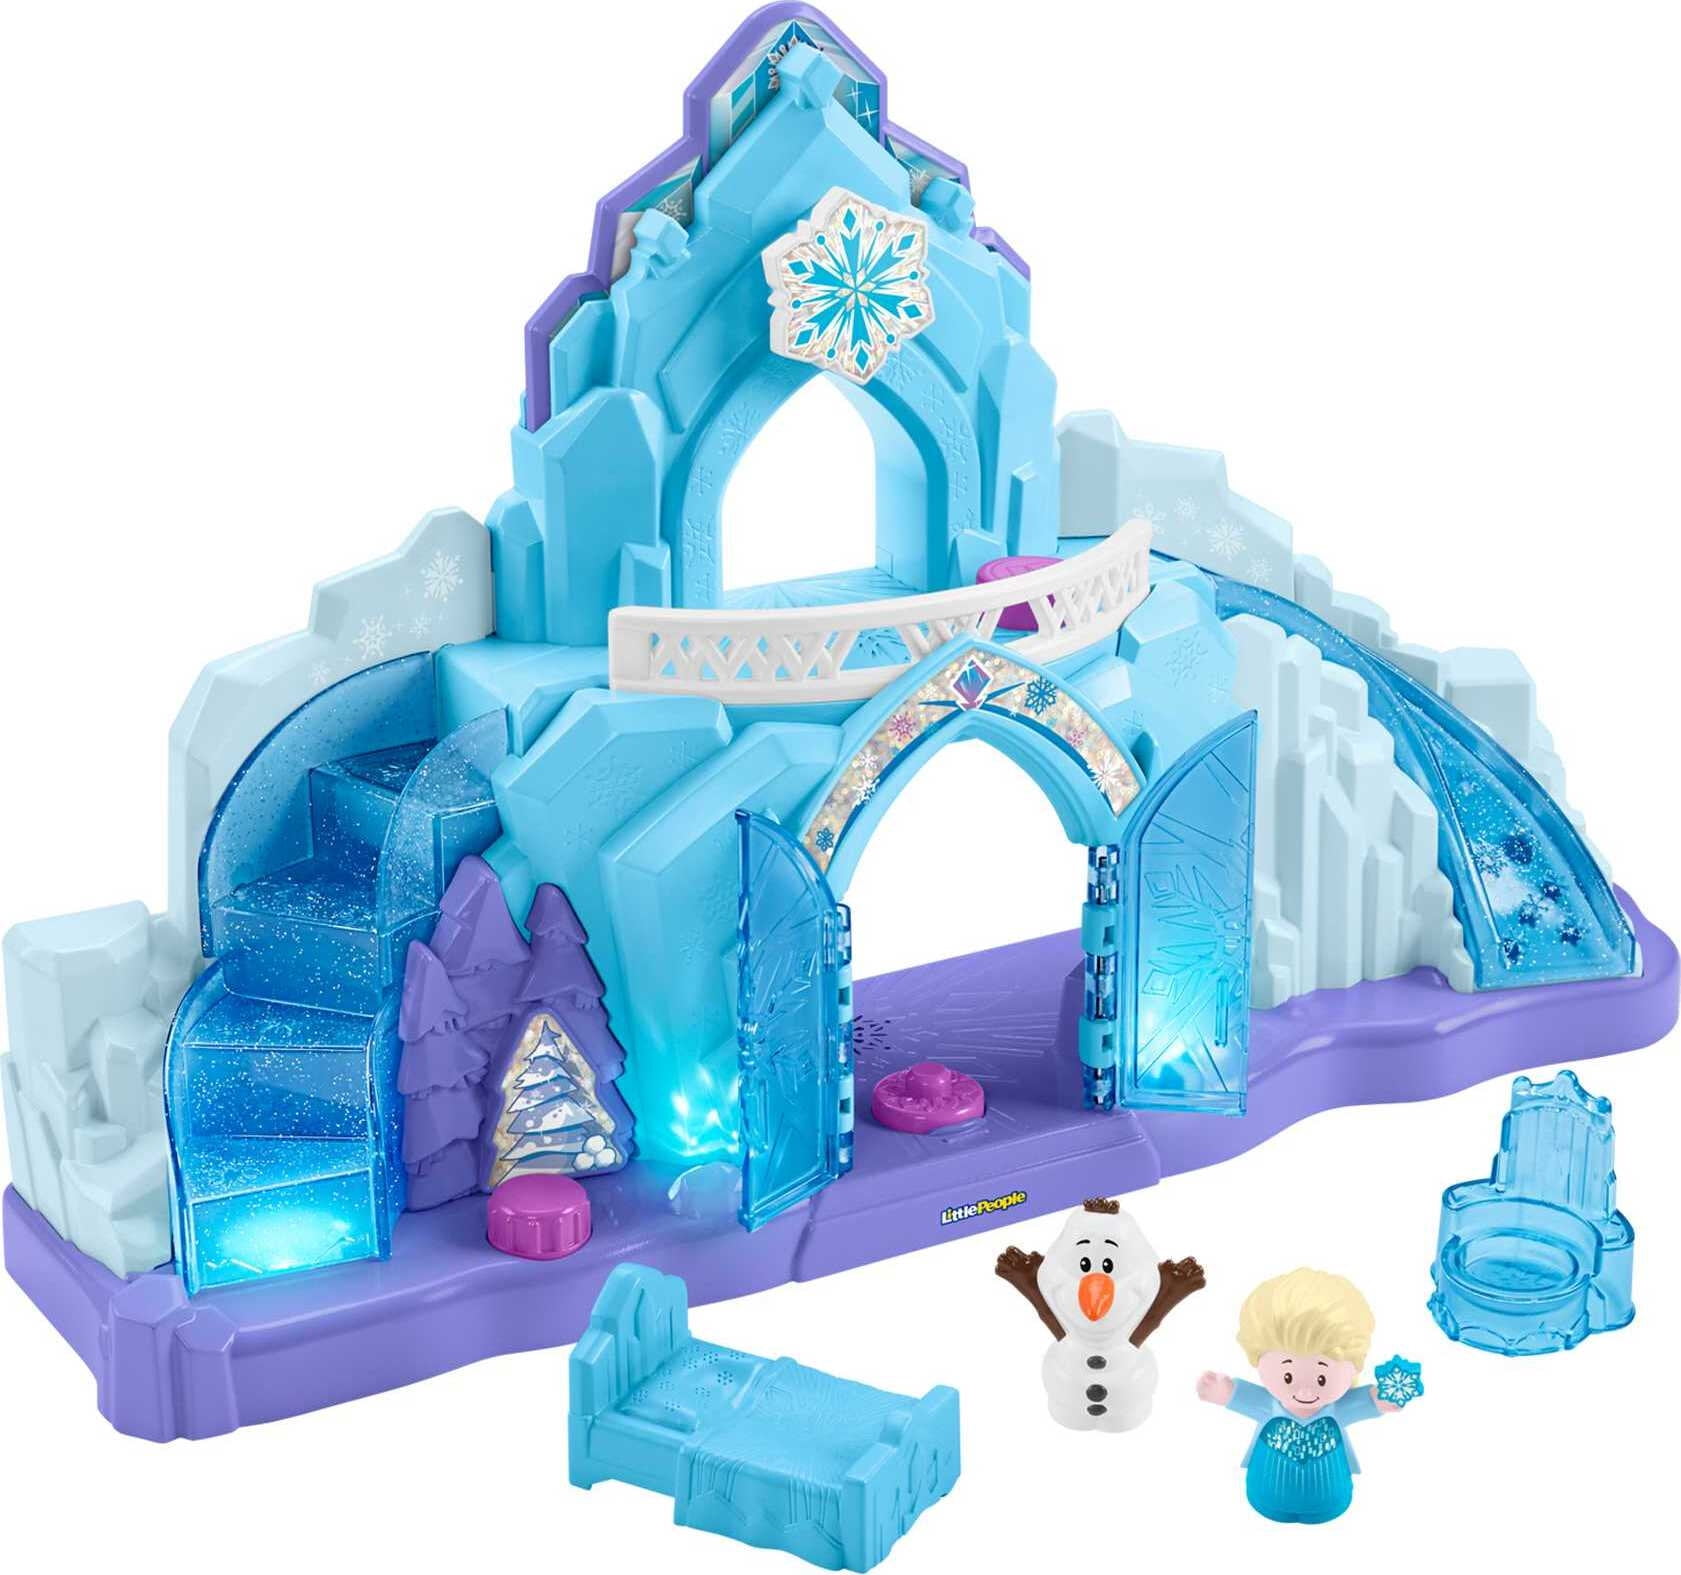 Fisher Price Little People Disney Frozen Kristoff's Sleigh & Figures Playset 